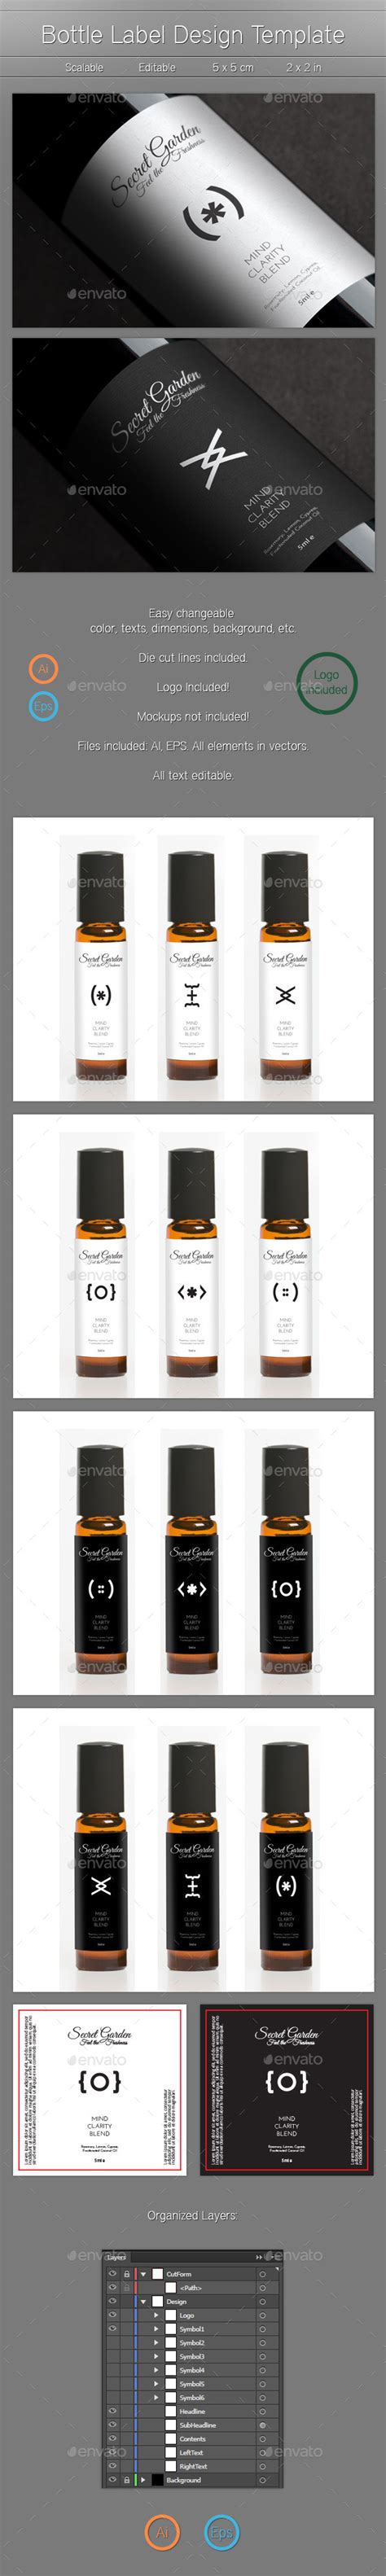 Sticker perfume design, fatale perfume bottle needs a label design 51 label designs for a business in kuwait. Perfume Label Templates » Dondrup.com